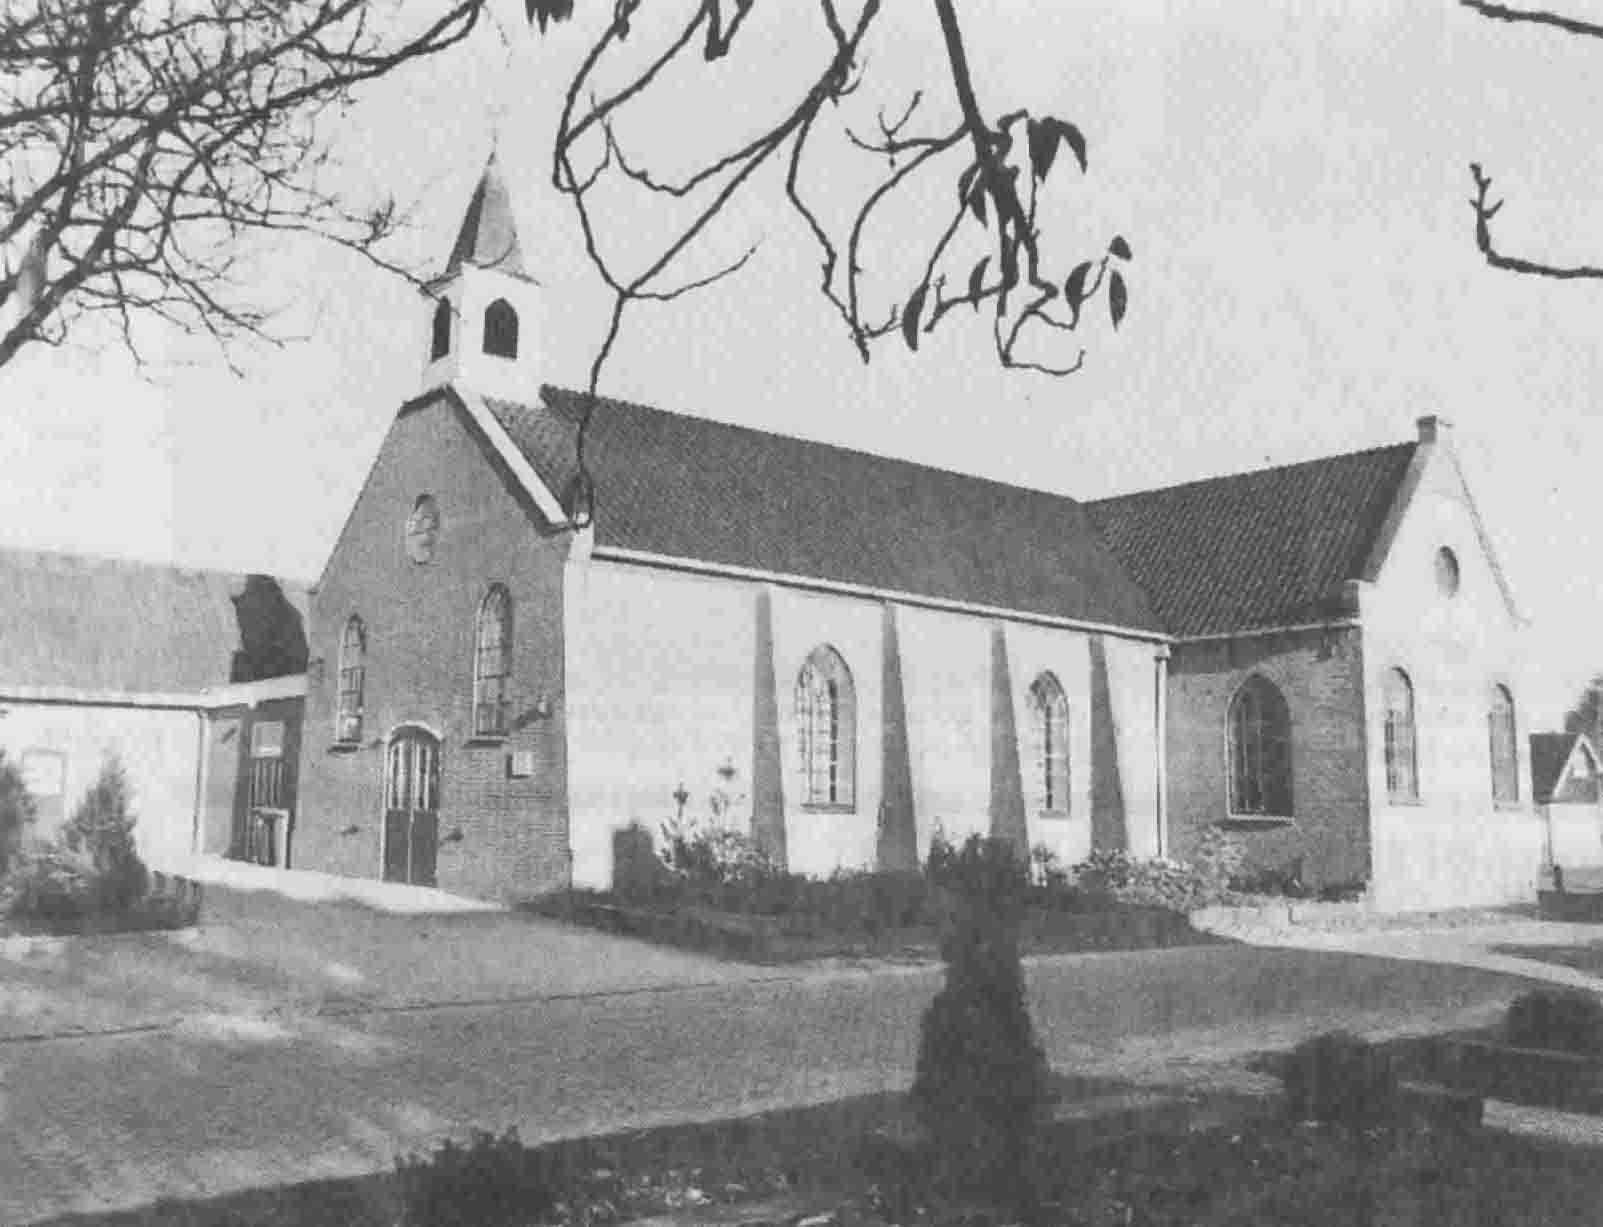 The State Reformed Church of Twijzelerheide